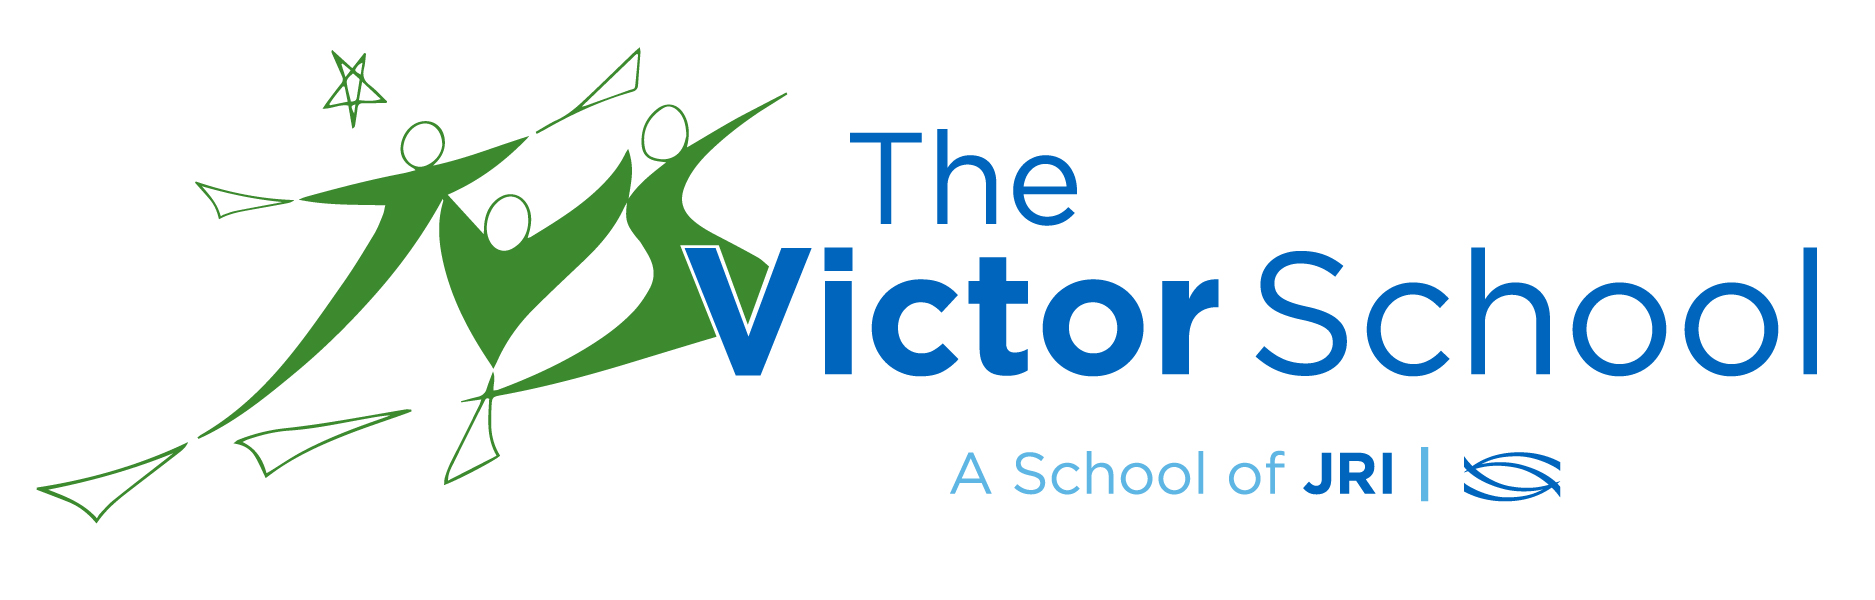 The Victor School Logo